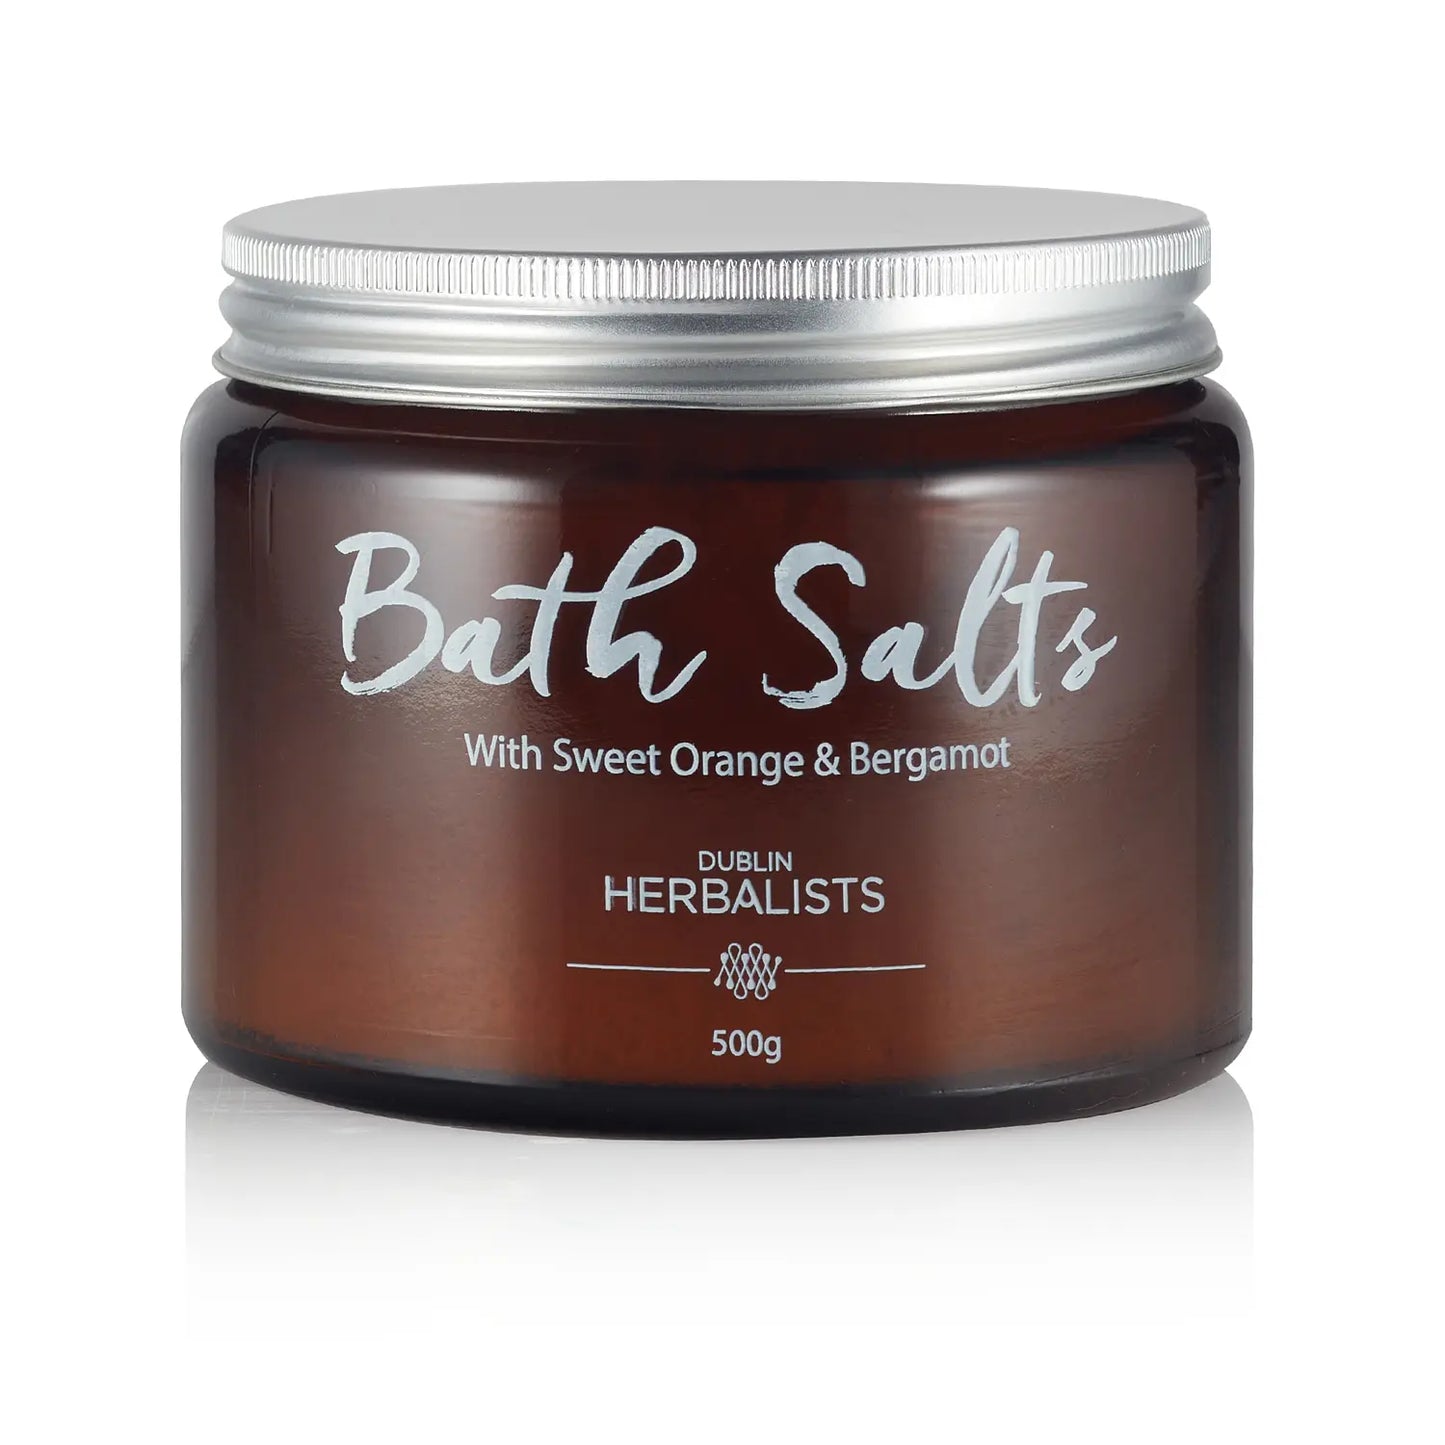 Dublin Herbalists Bath Salts - NO GIFT BOX